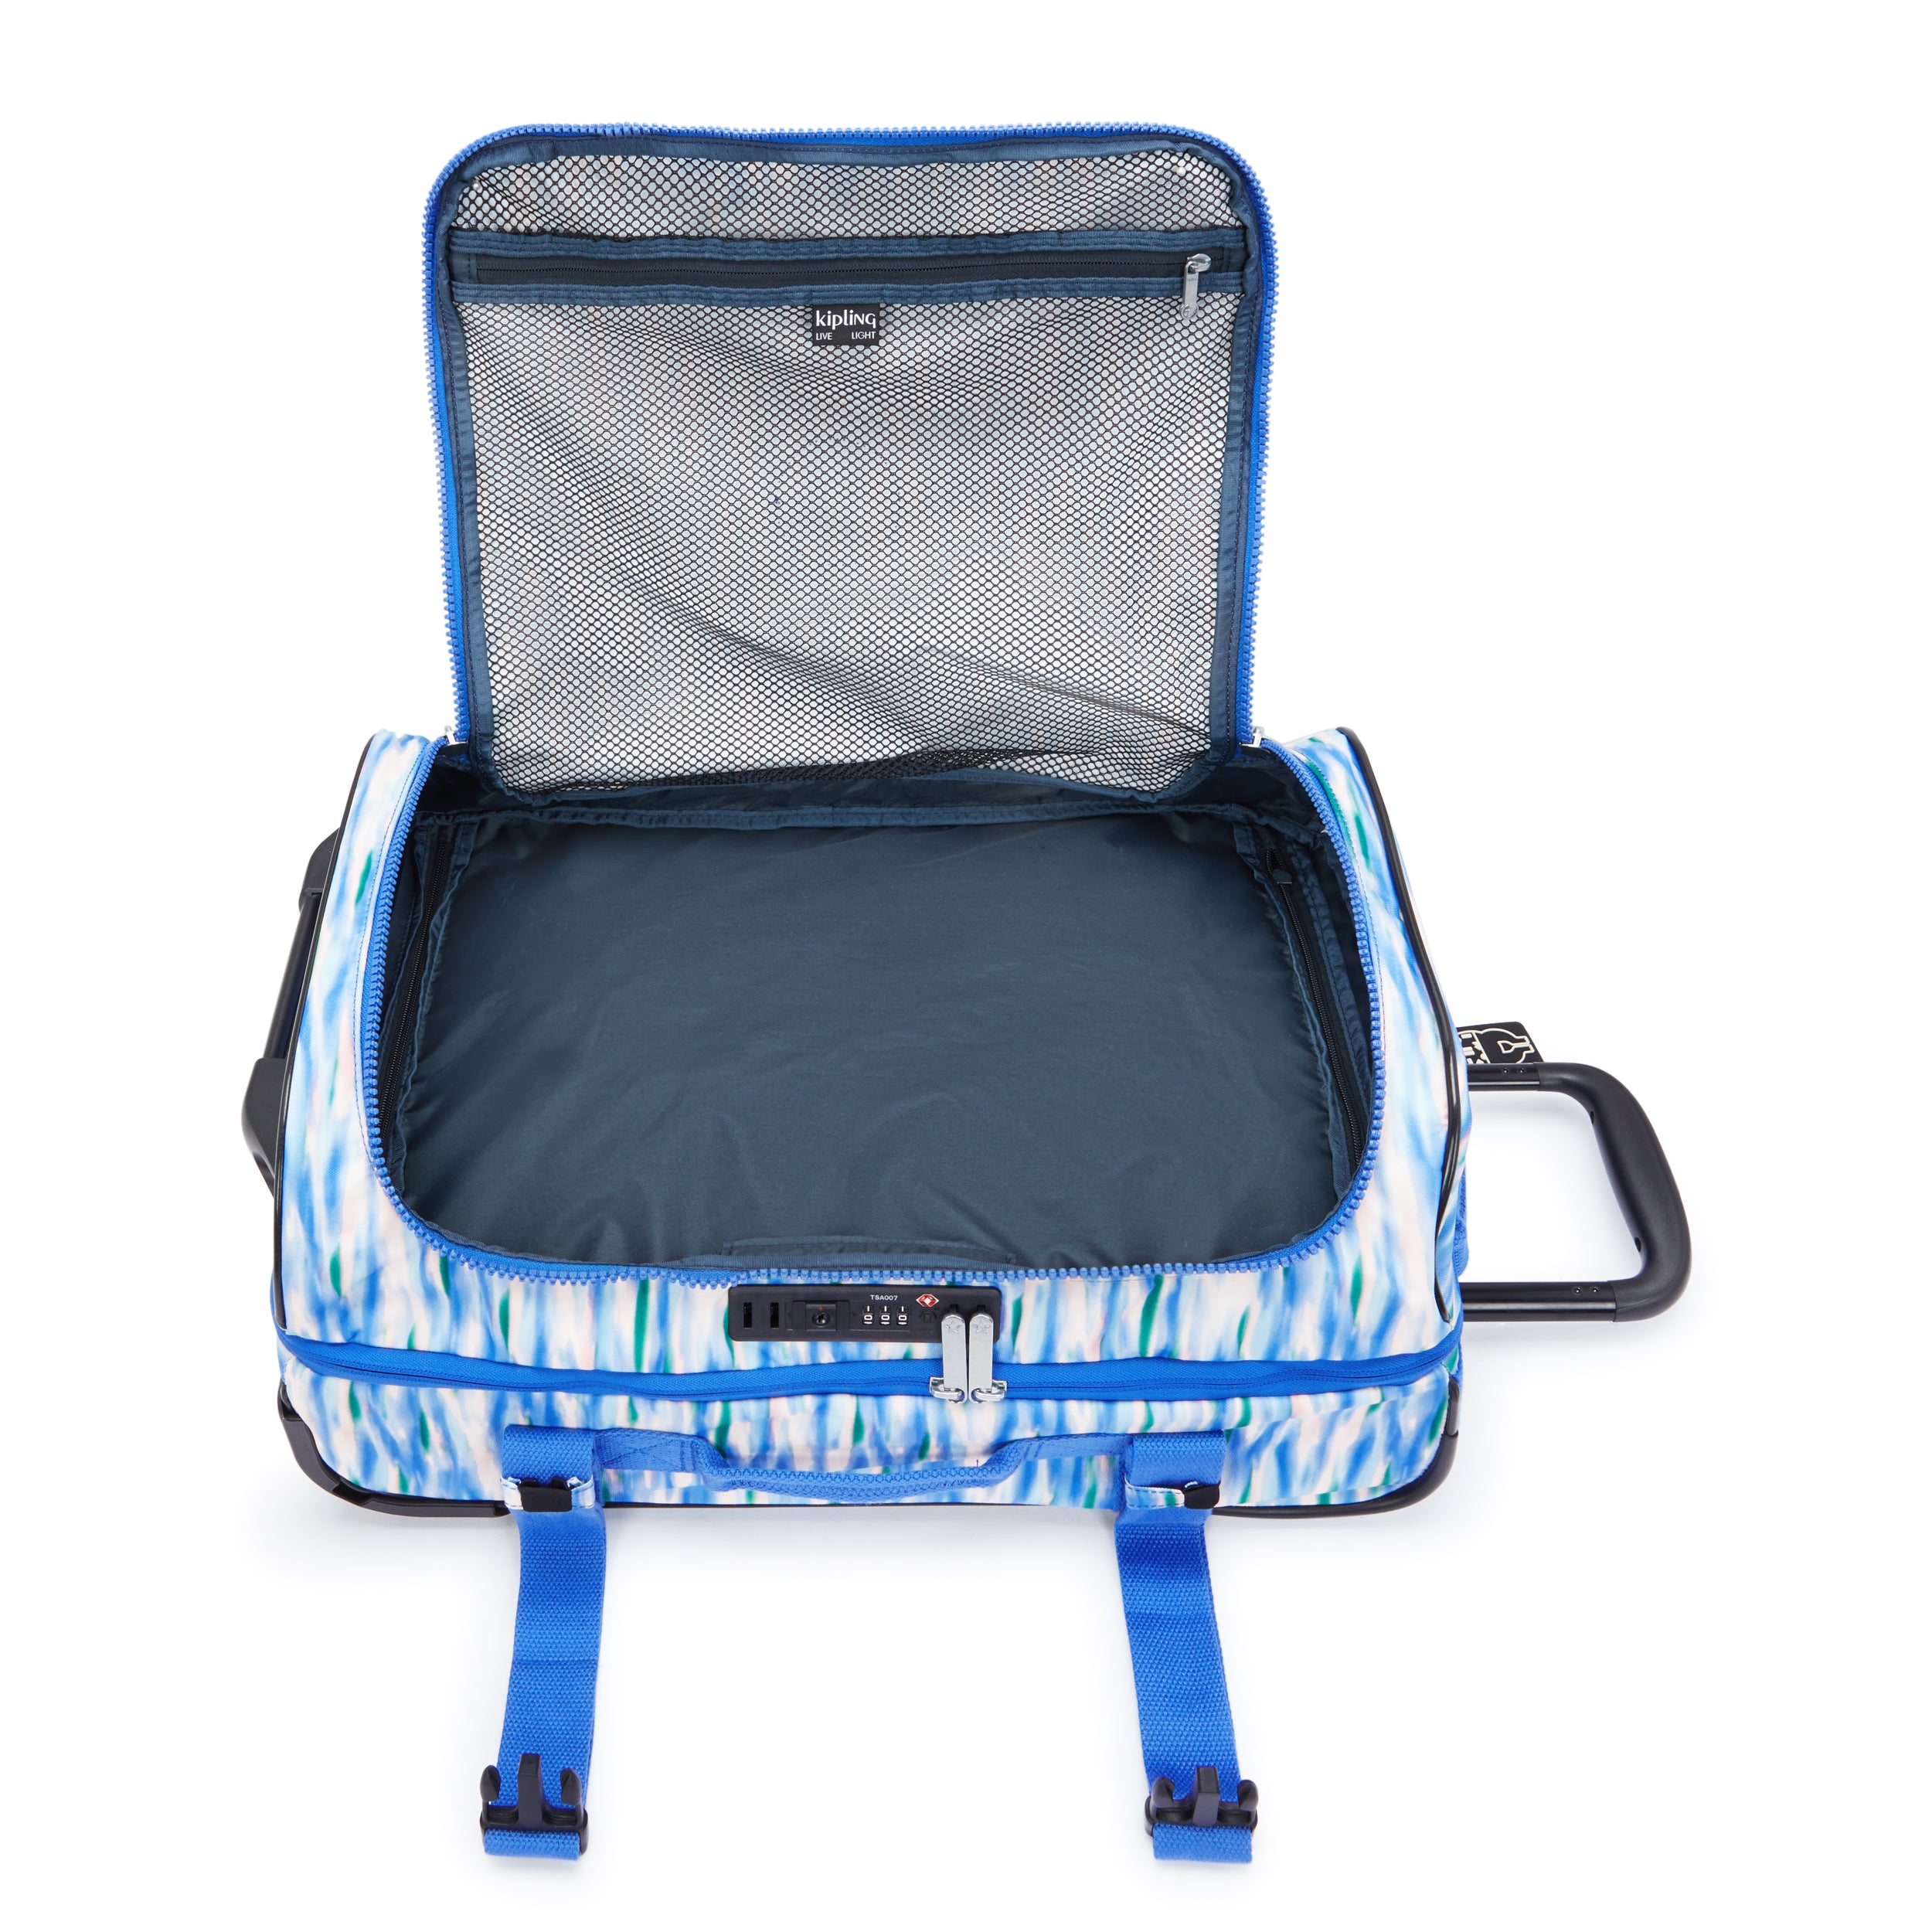 KIPLING-Aviana S-Small wheeled luggage-Diluted Blue-I7428-TX9